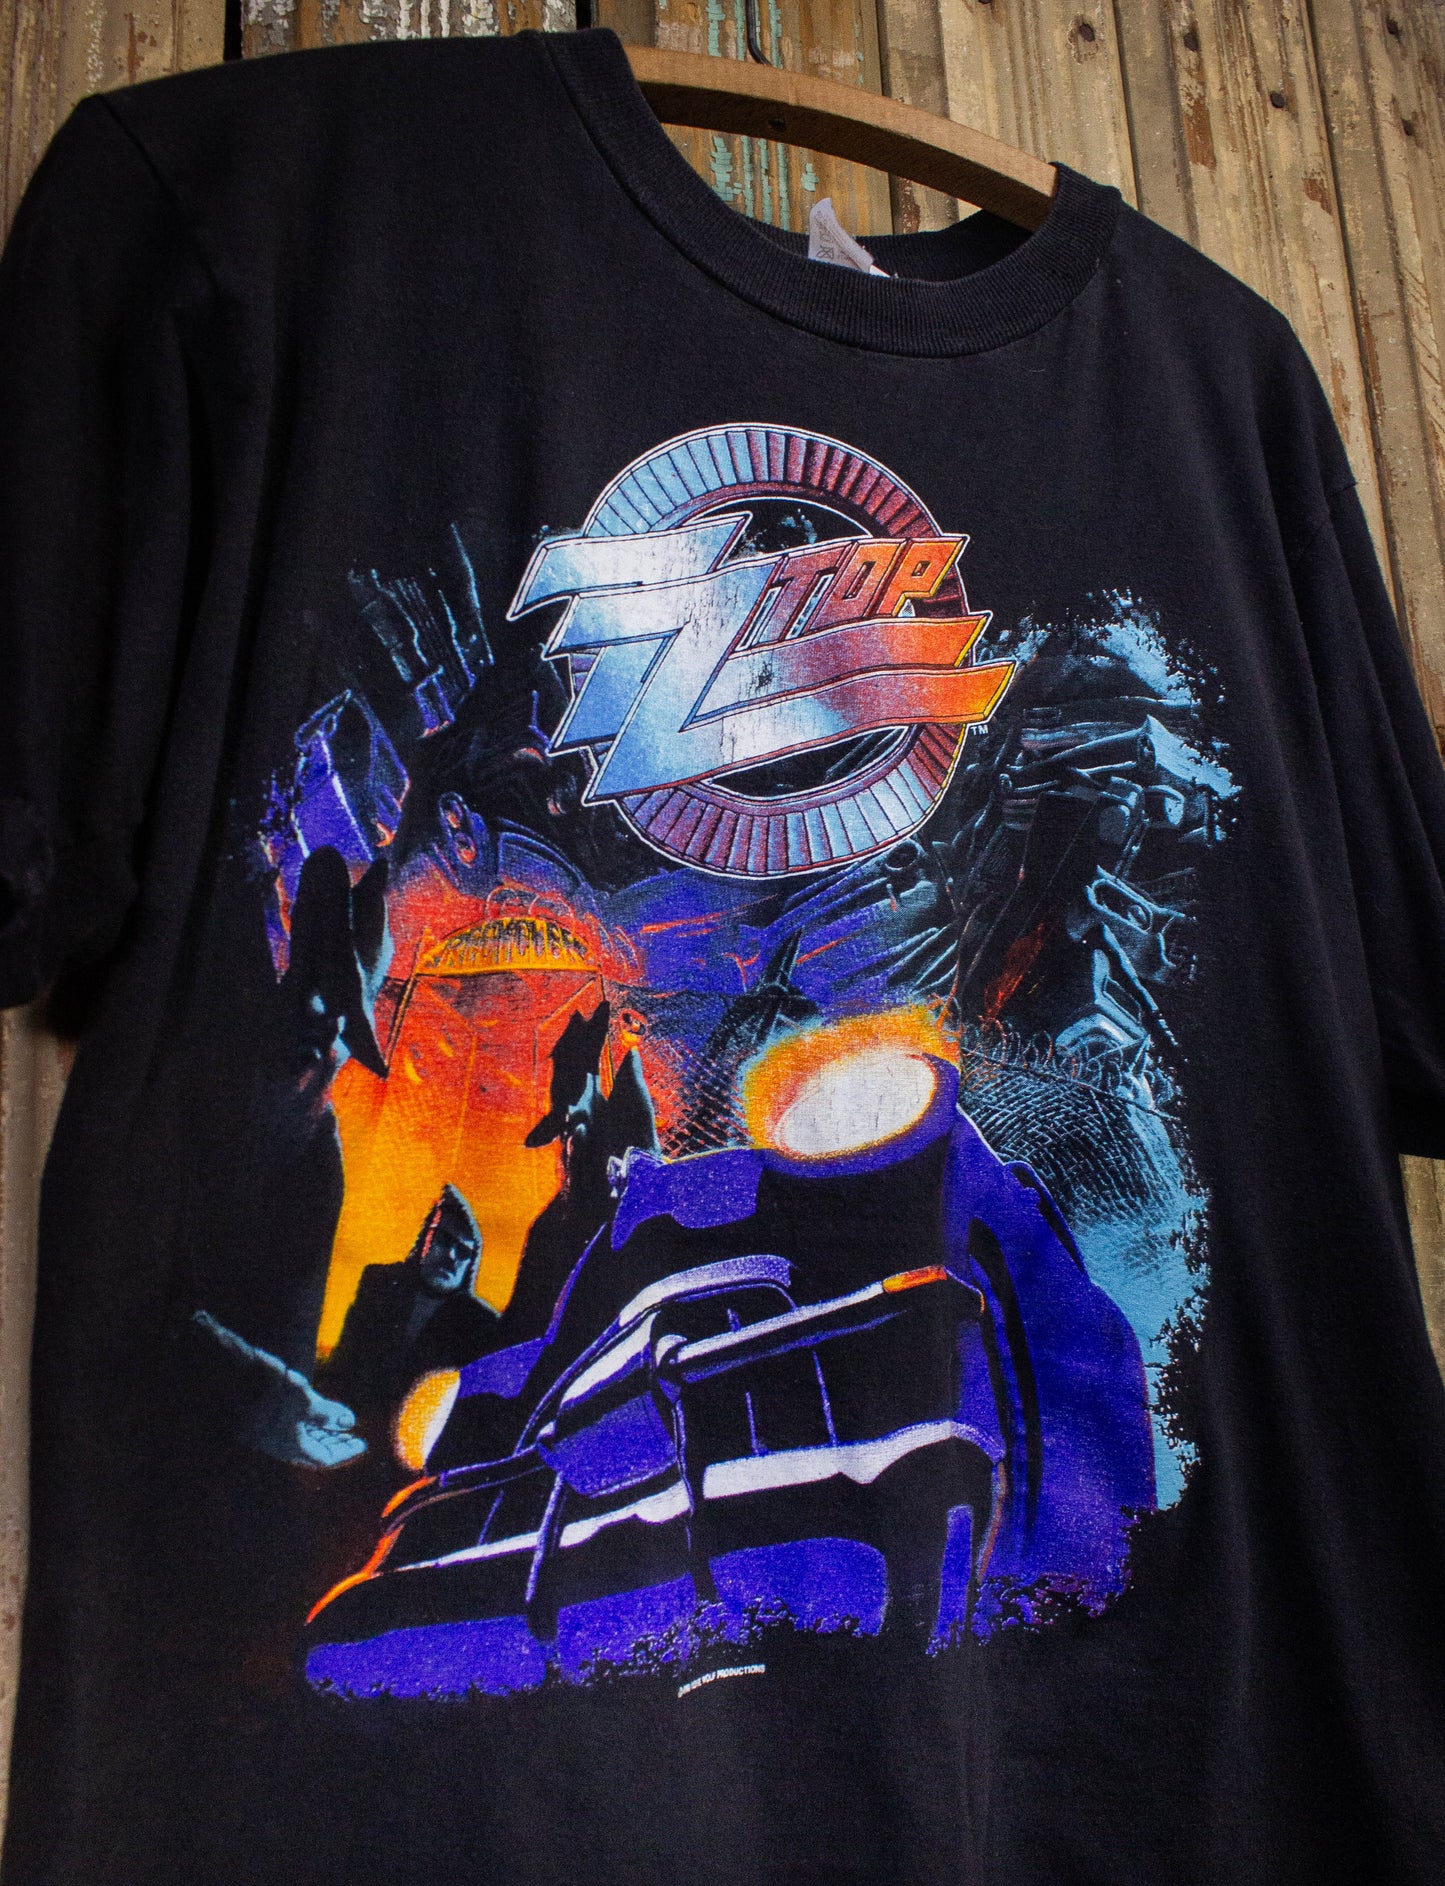 Vintage ZZ Top Recycler World Tour Concert T Shirt 1991 Black Medium